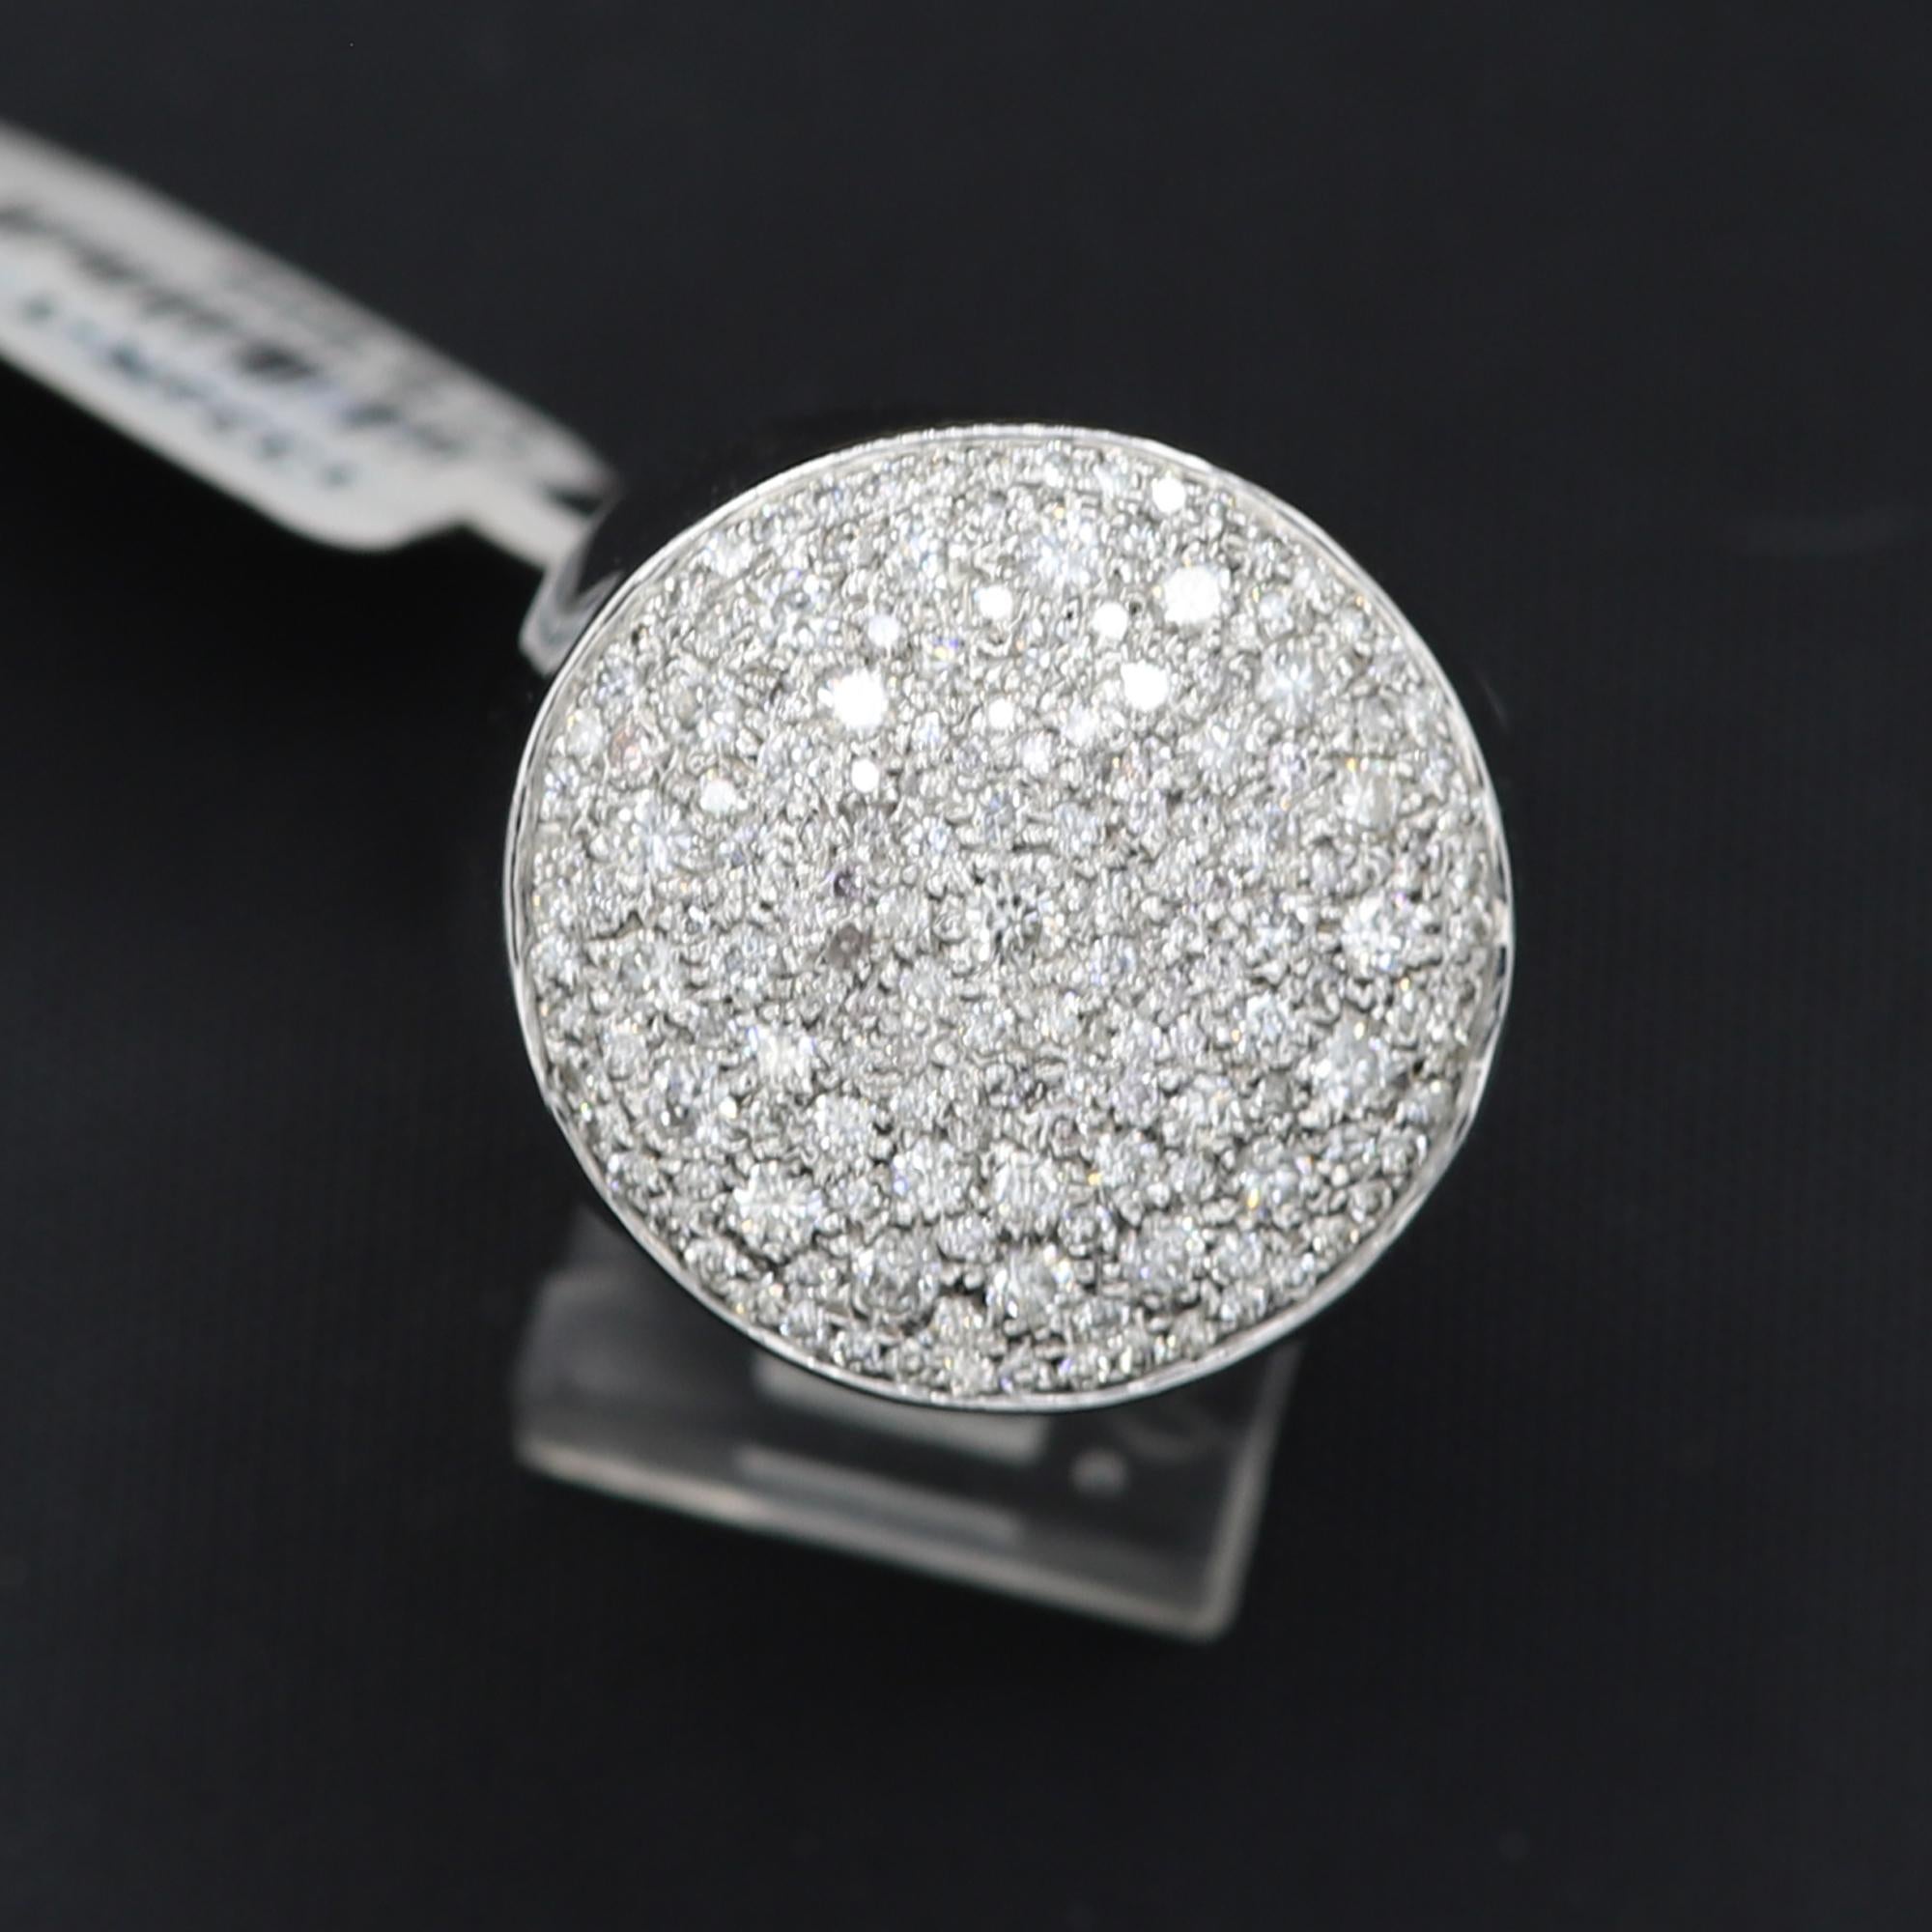 Large Bold Round Cluster Ring
18k White gold 15.0 grams
Diamonds 2.49 carat G-VS
Cluster Design size 20 mm diameter
Finger size 7